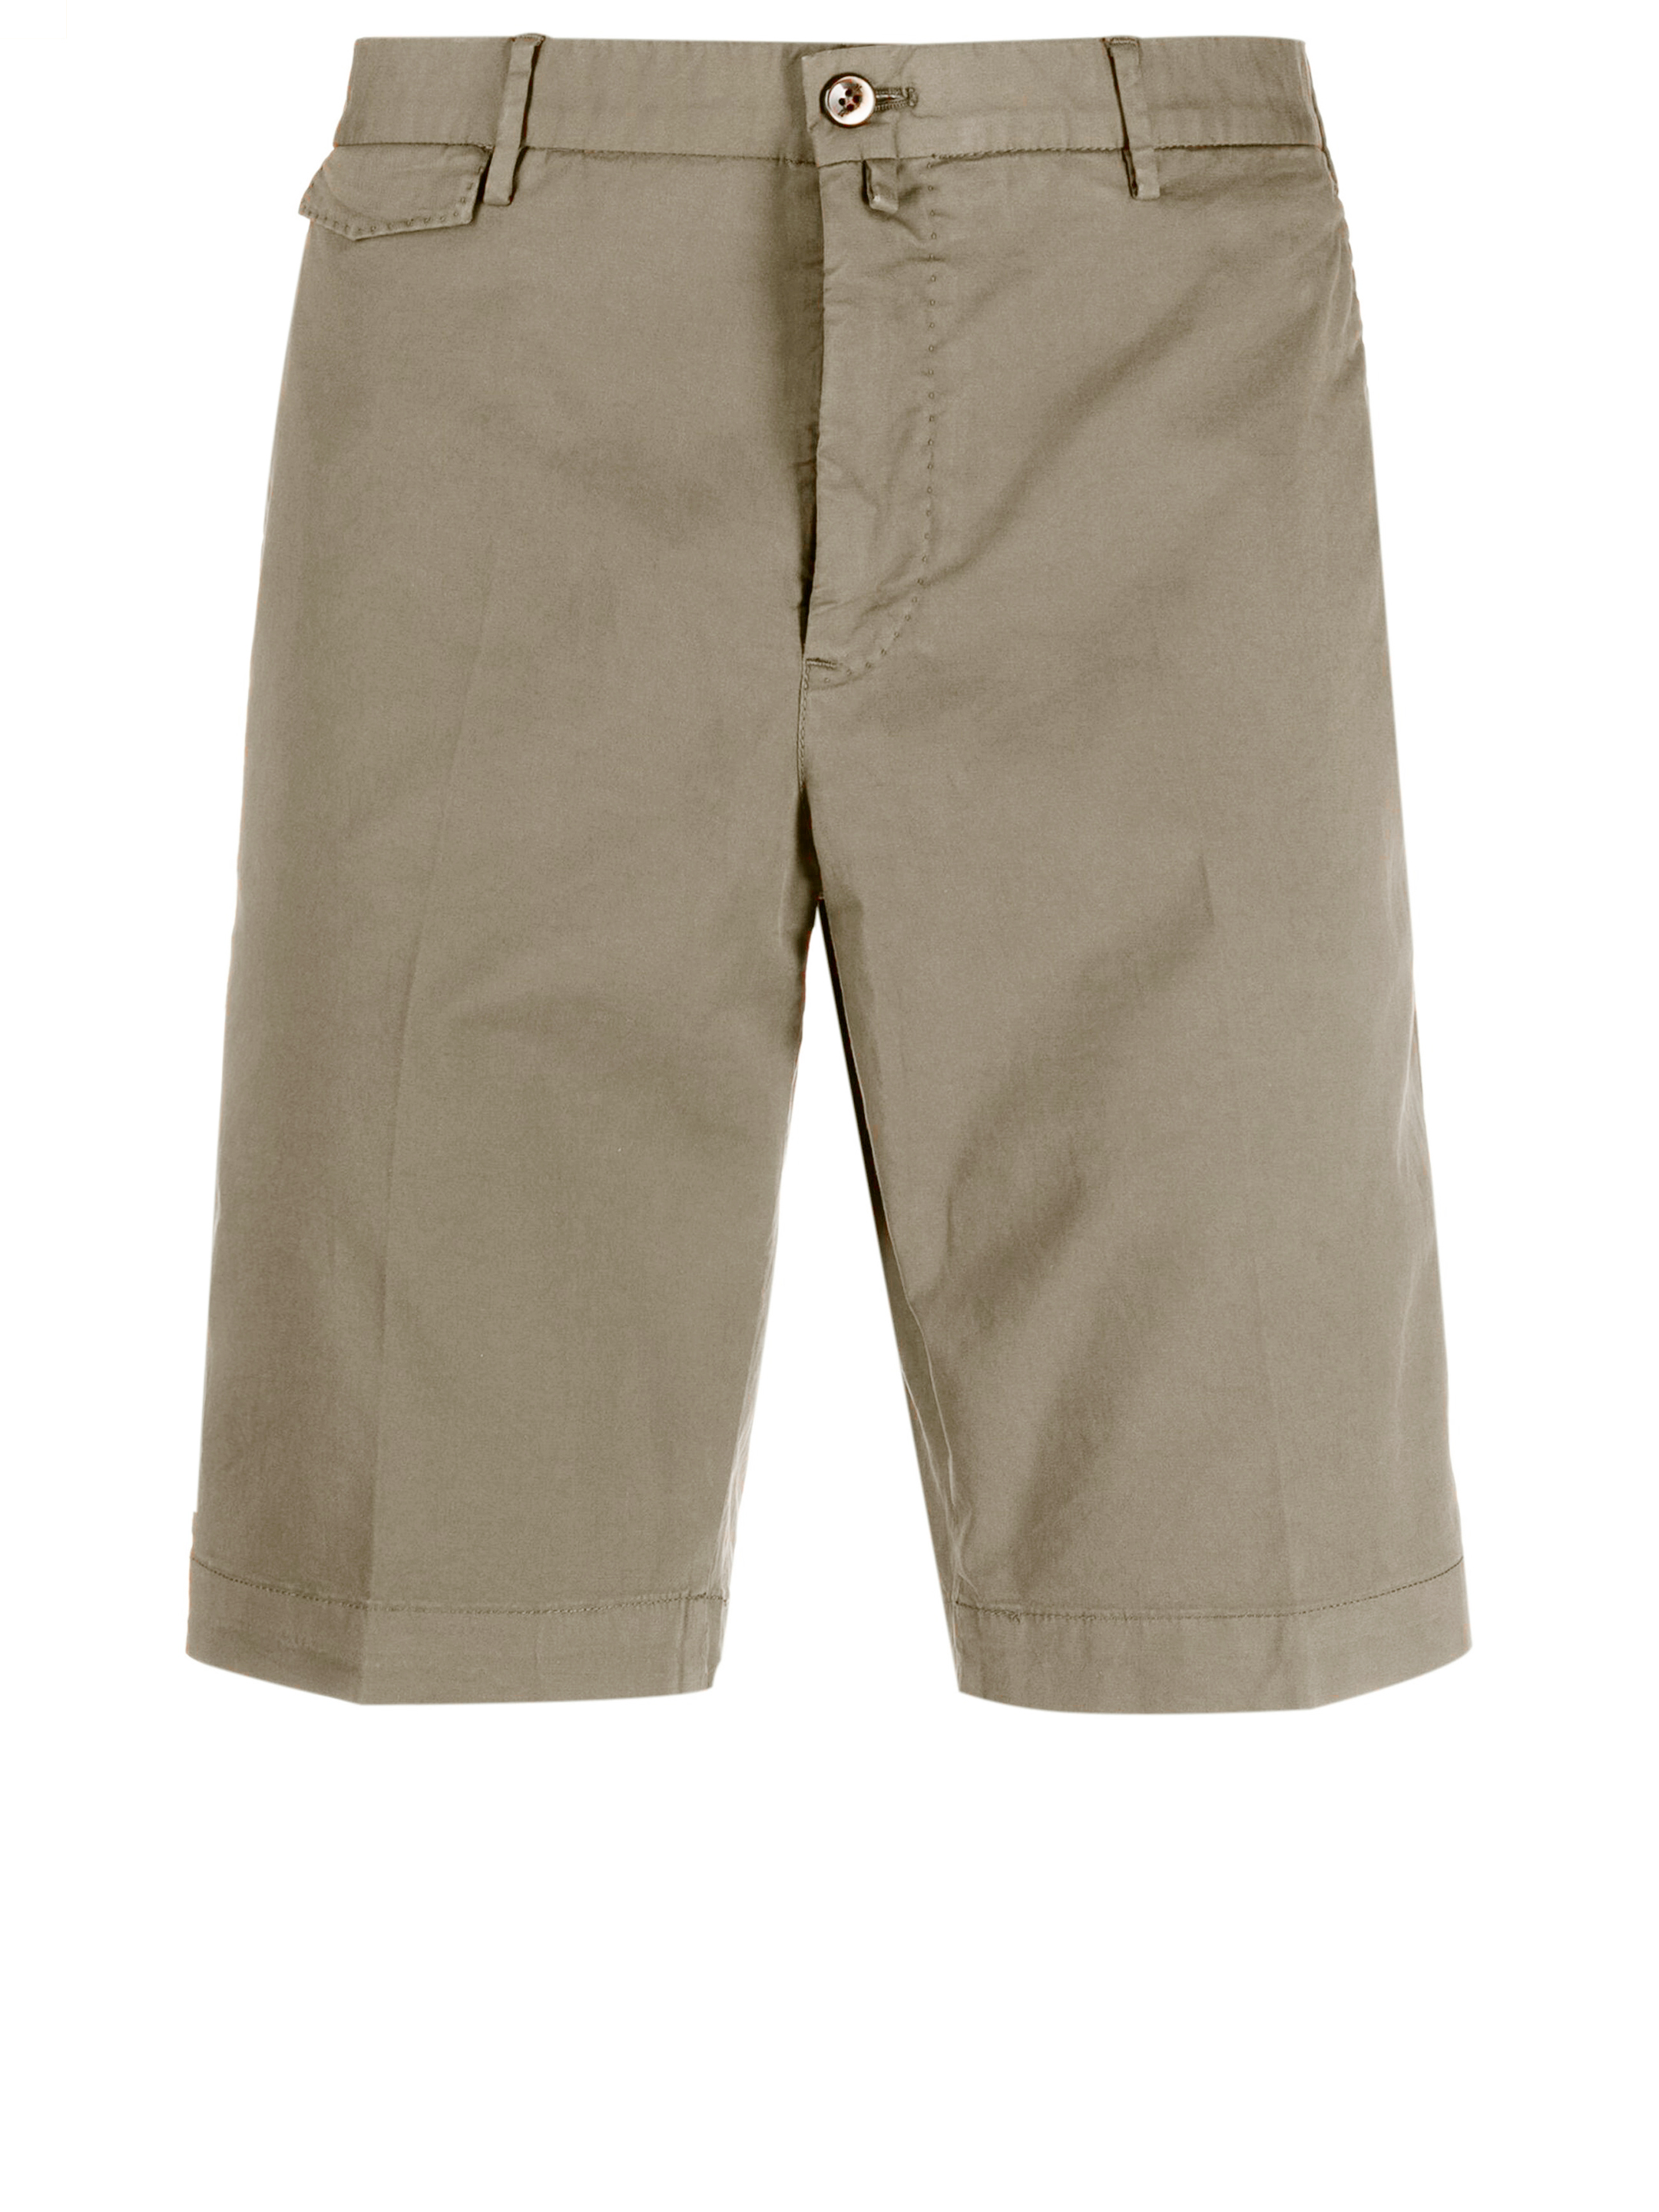 PT TORINO - Cotton bermuda shorts | Leam Roma - Luxury Shopping Online